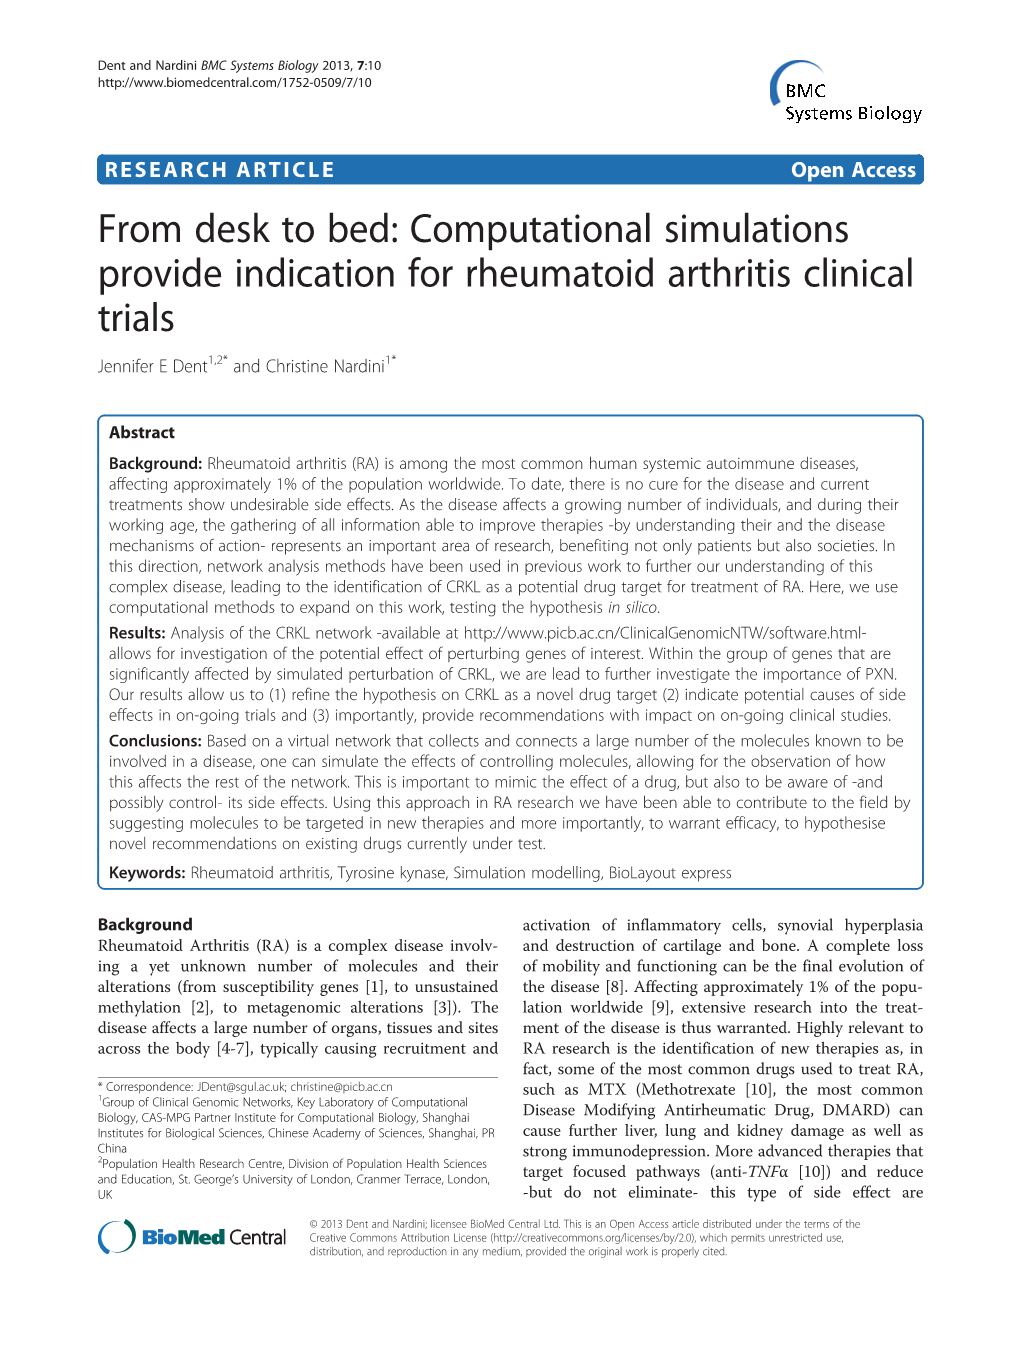 Computational Simulations Provide Indication for Rheumatoid Arthritis Clinical Trials Jennifer E Dent1,2* and Christine Nardini1*